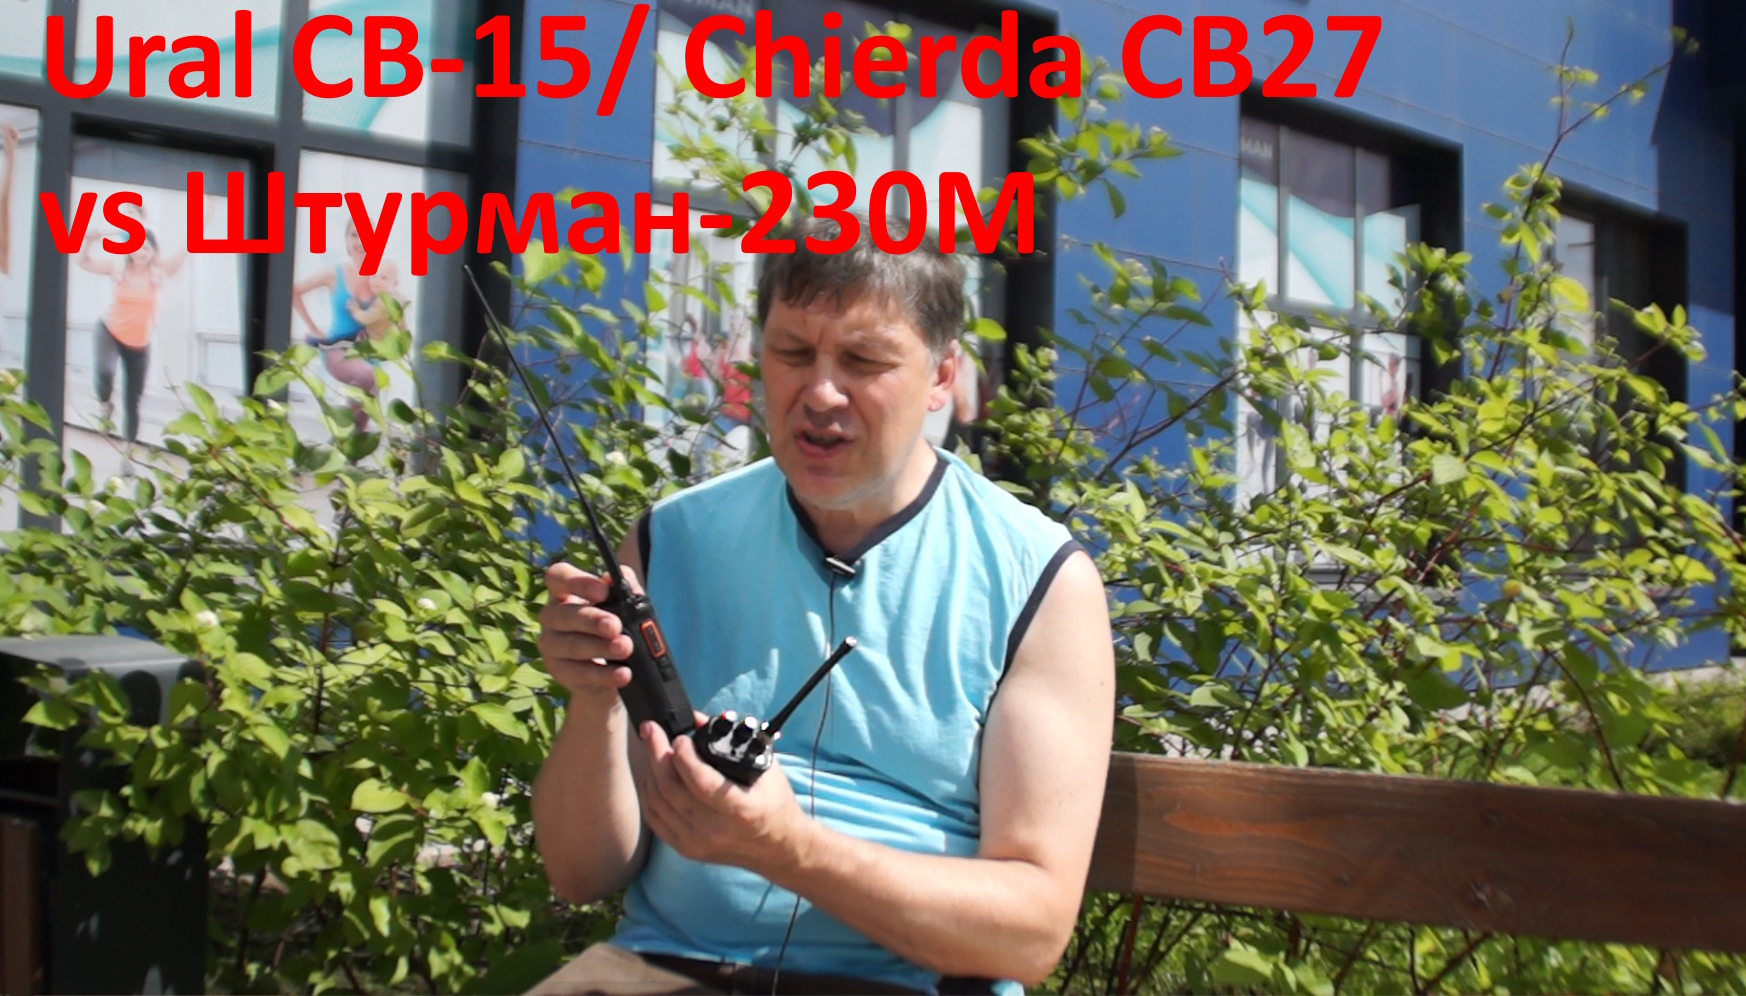 Штурман-230М vs Ural CB-15 - портативные СиБи рации